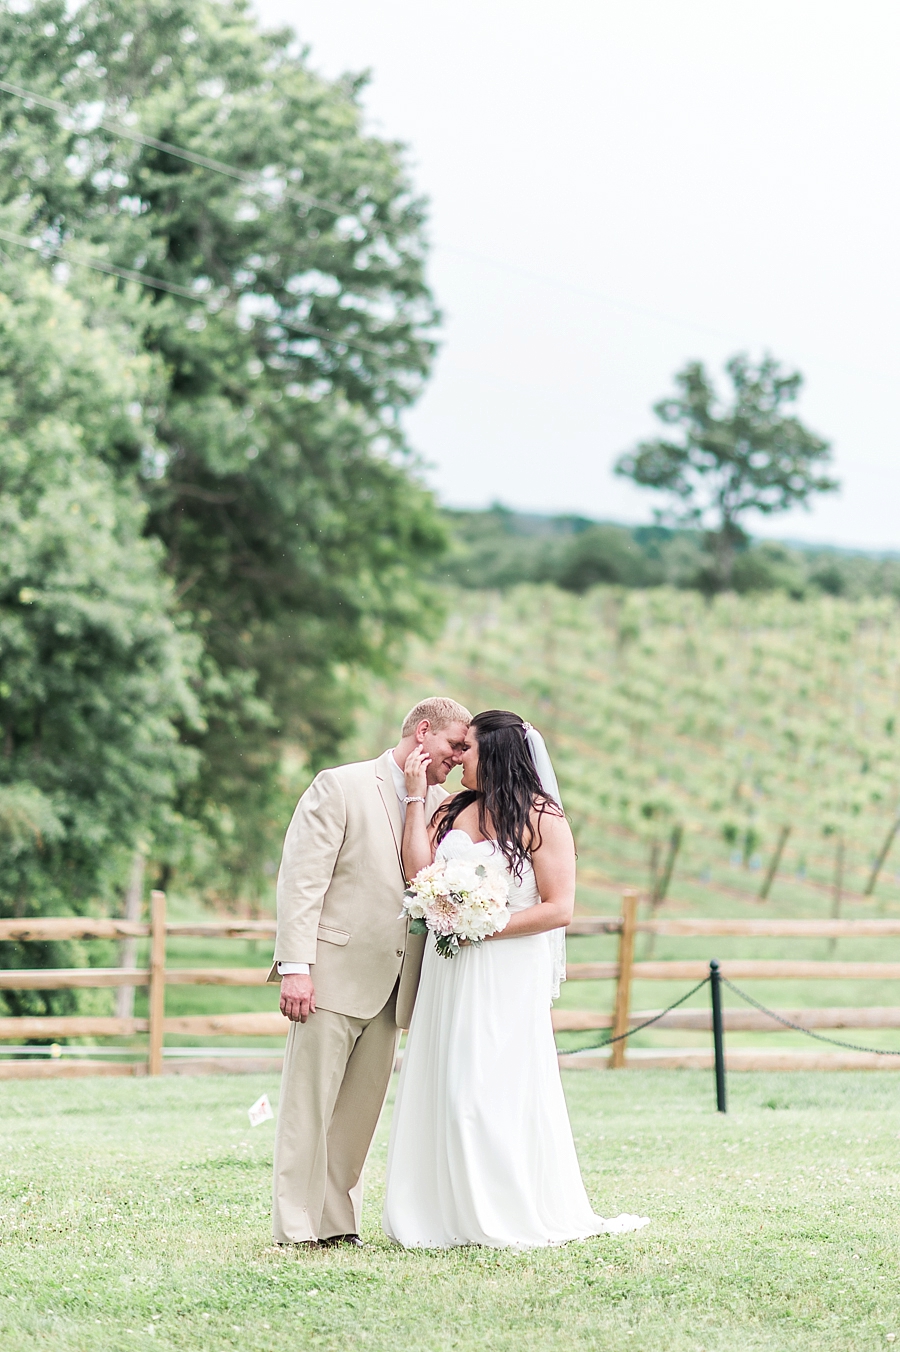 JR and Steph | The Winery at Bull Run, Virginia Wedding Photographer